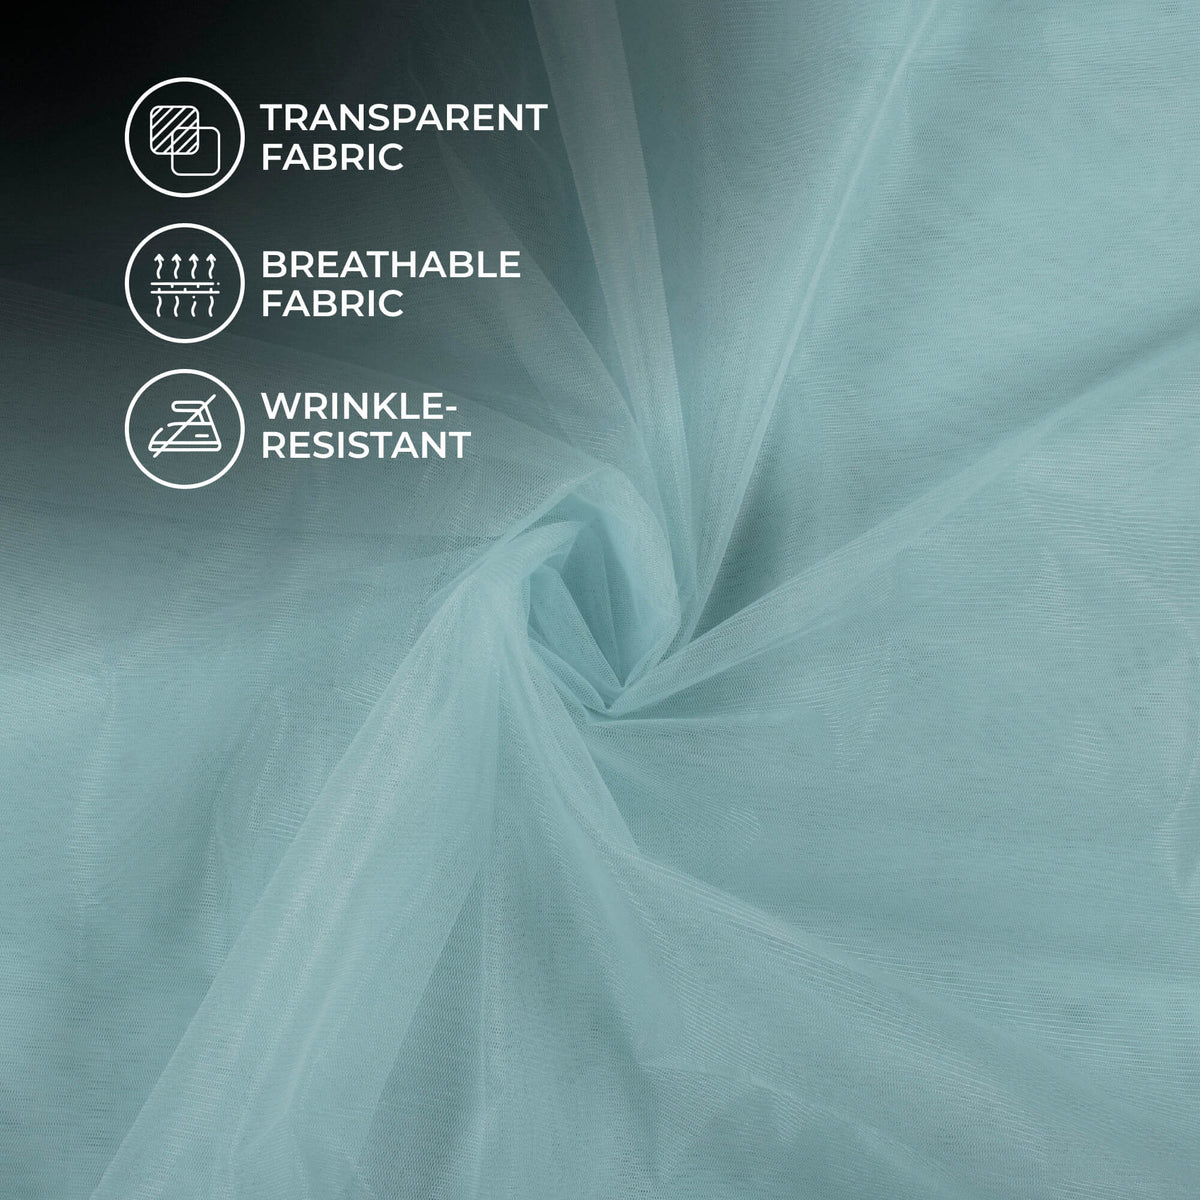 Slate Blue Plain Premium Quality Butterfly Net Fabric